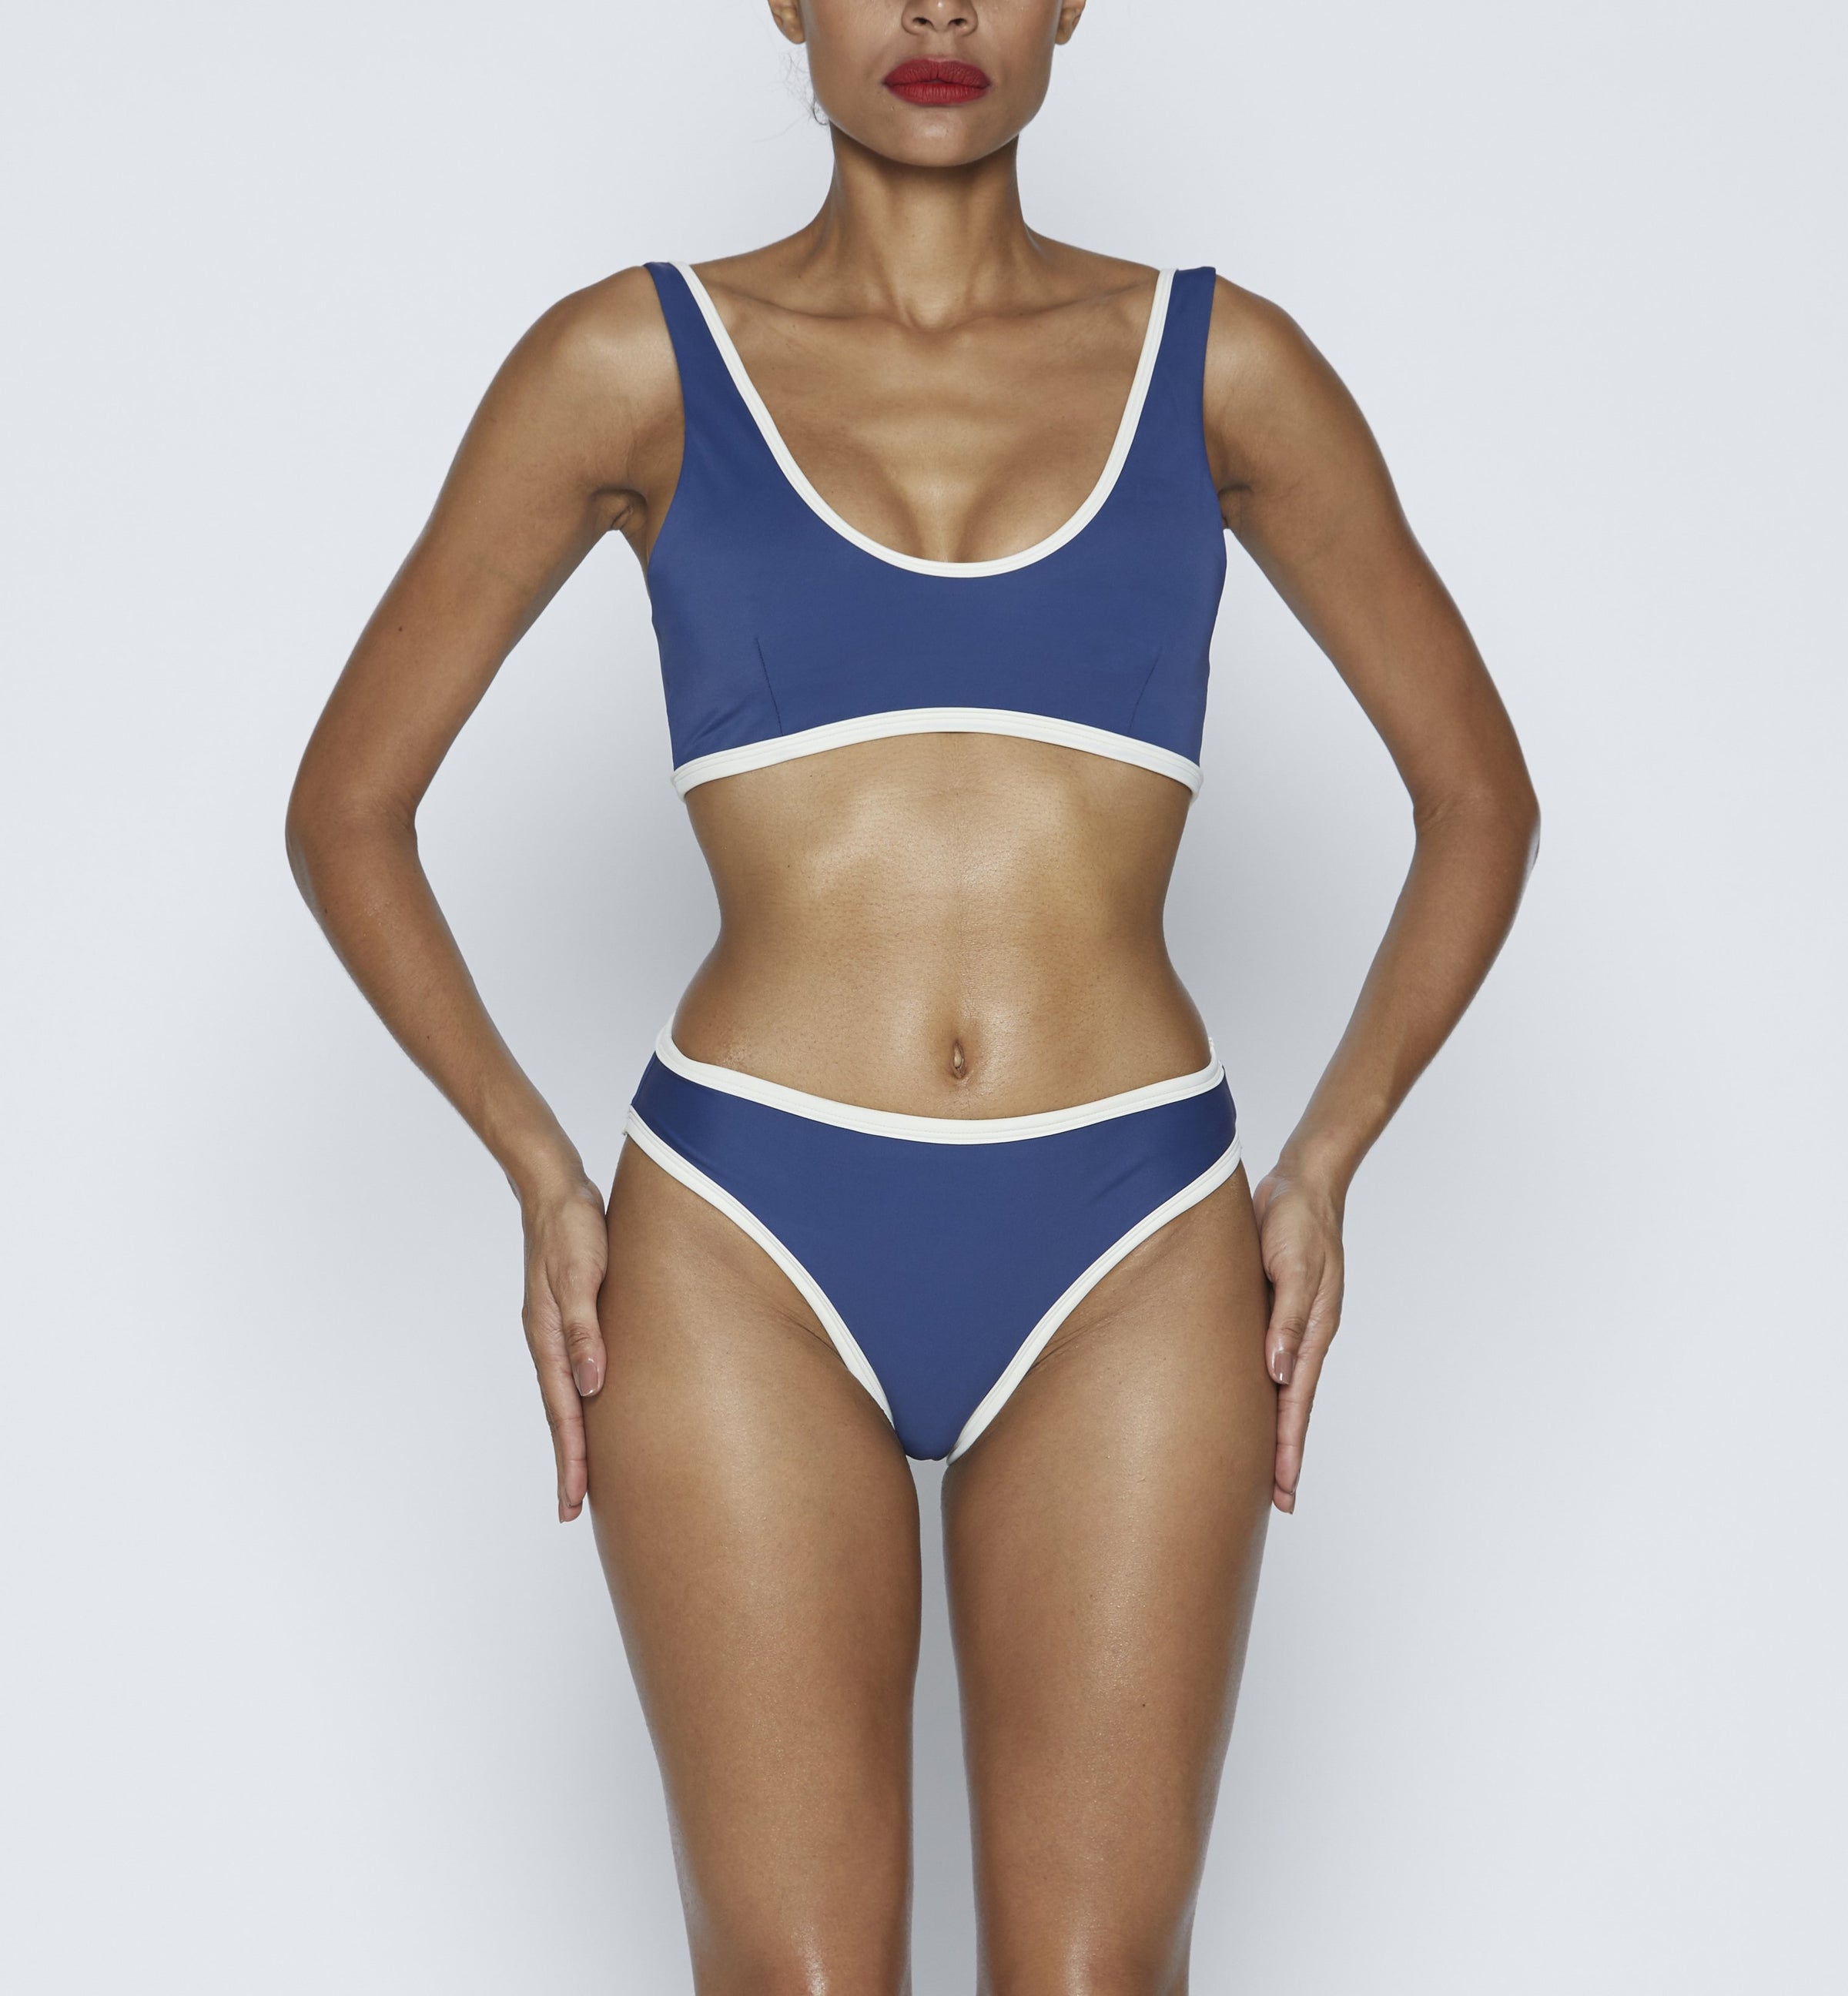 Bikini Set, Shop Women's Swimwear & Lingerie